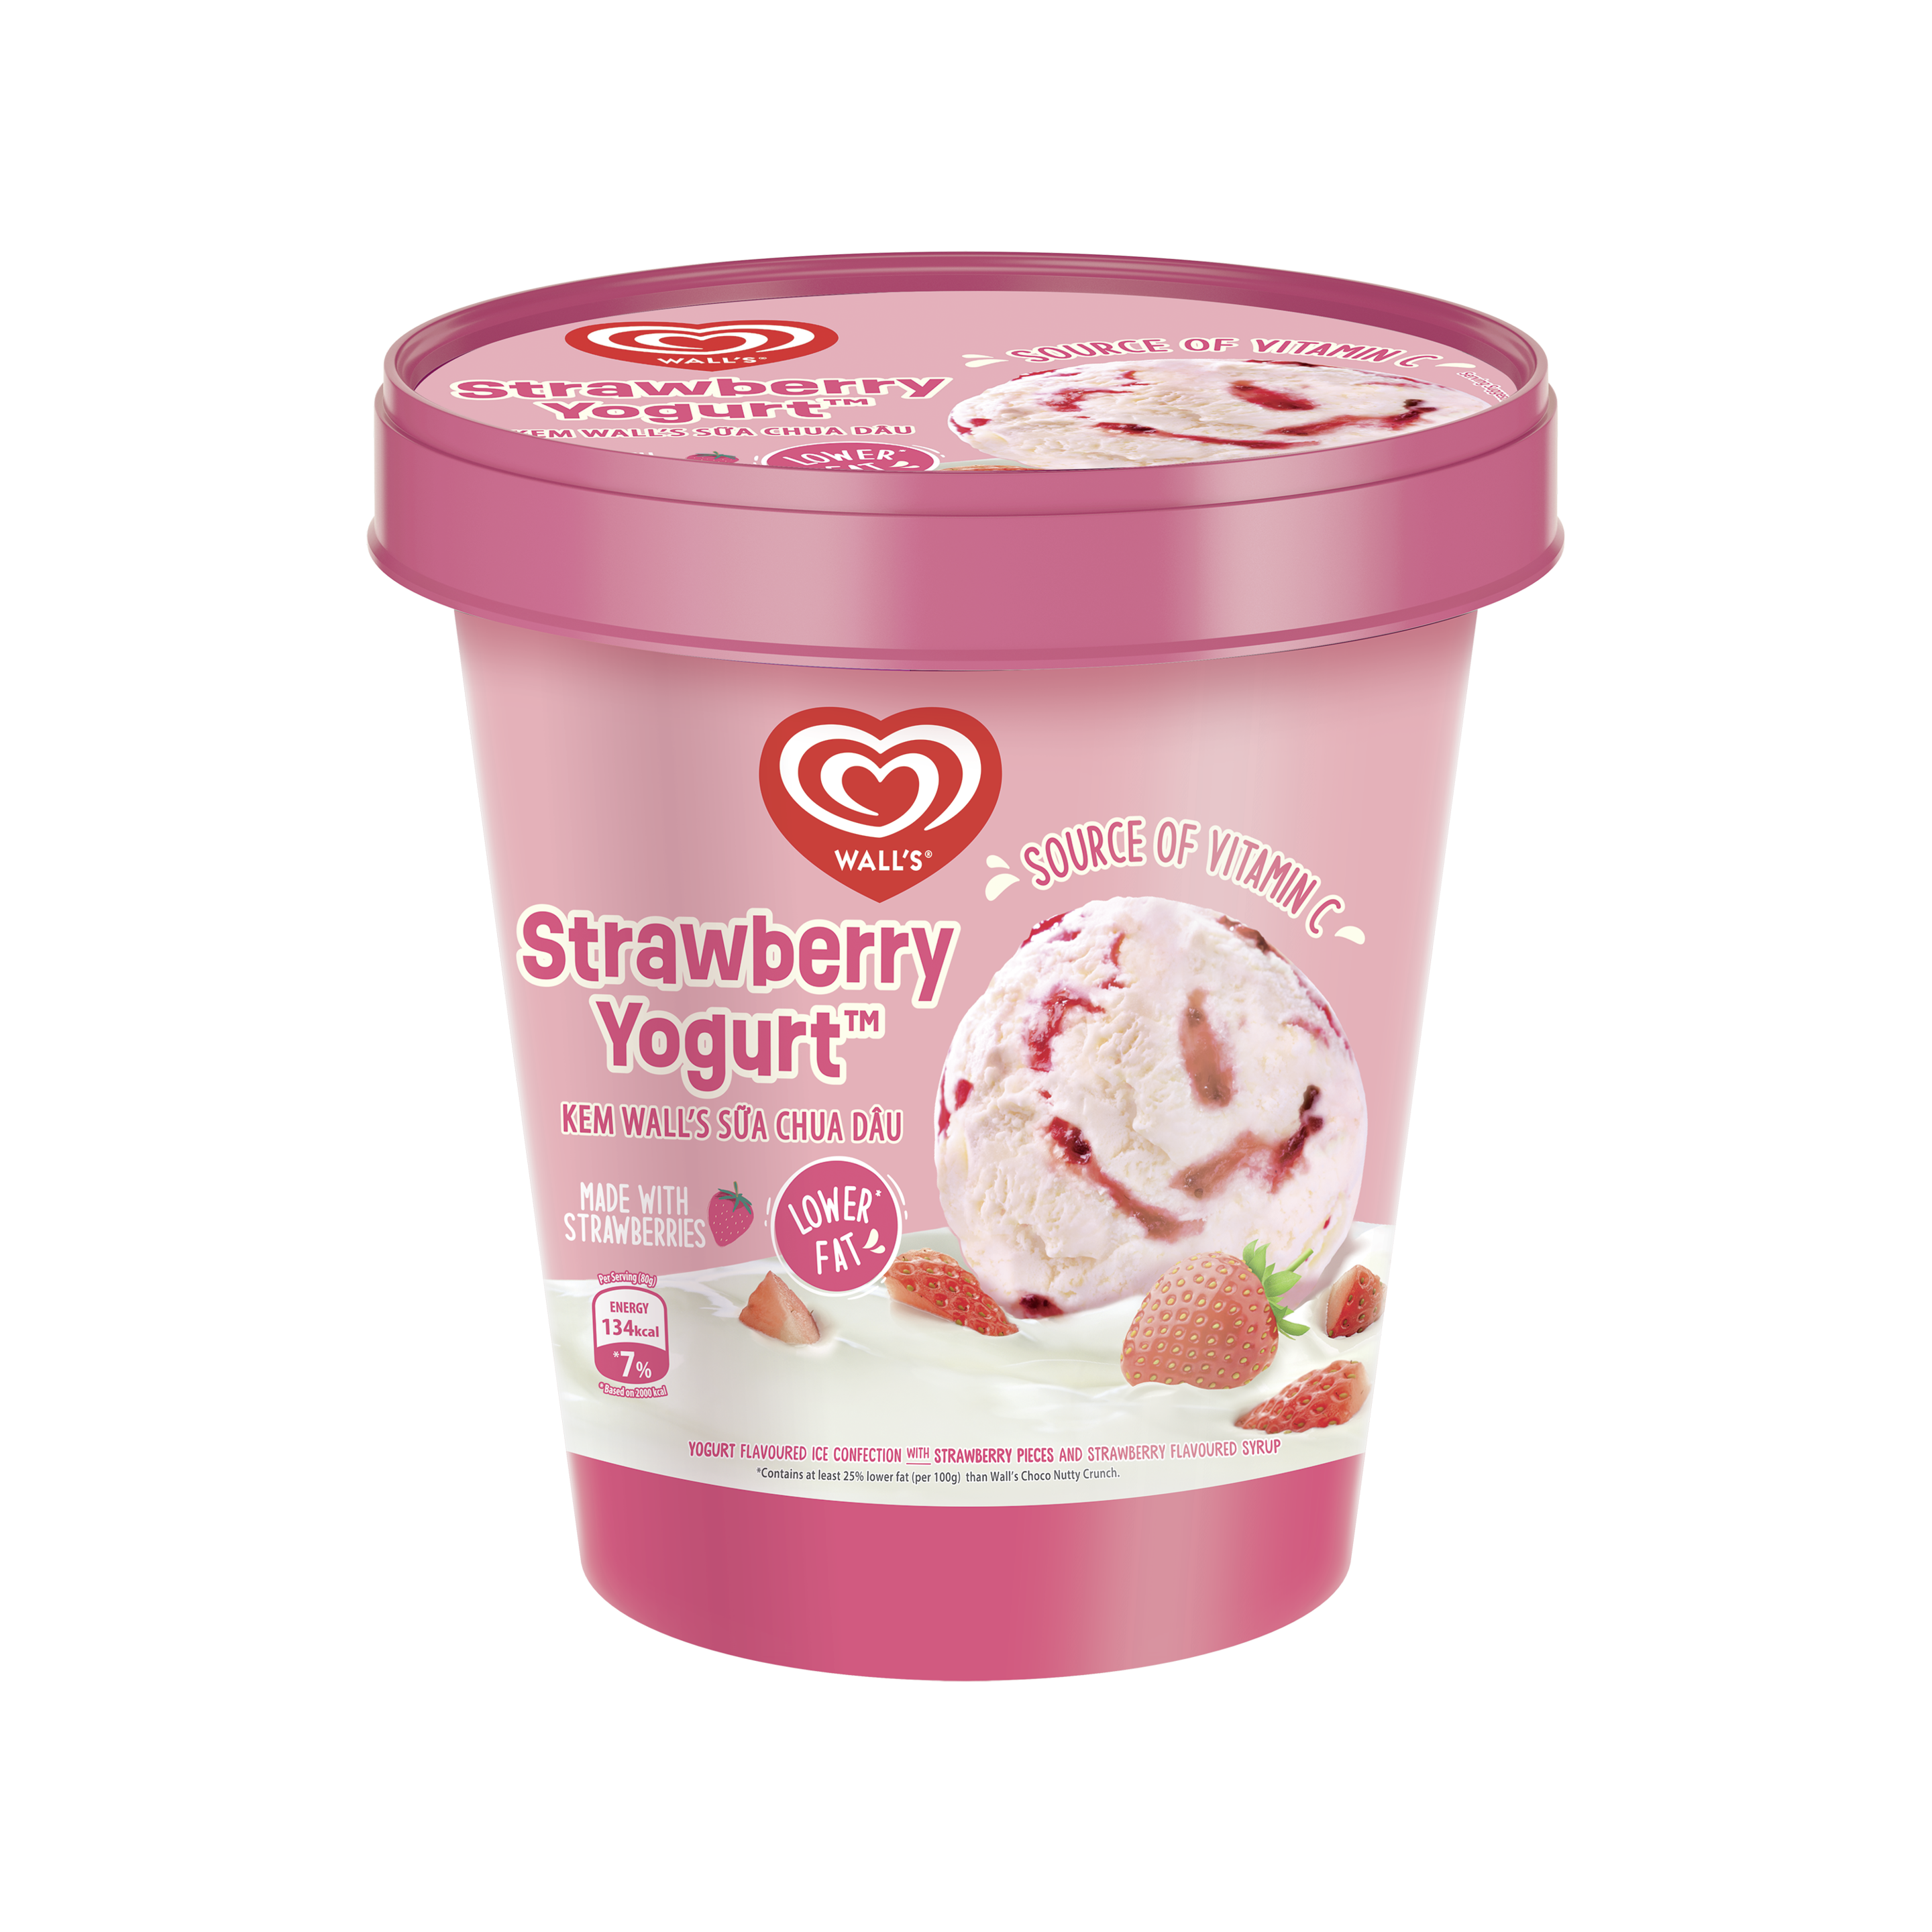 Wall’s Strawberry Yogurt